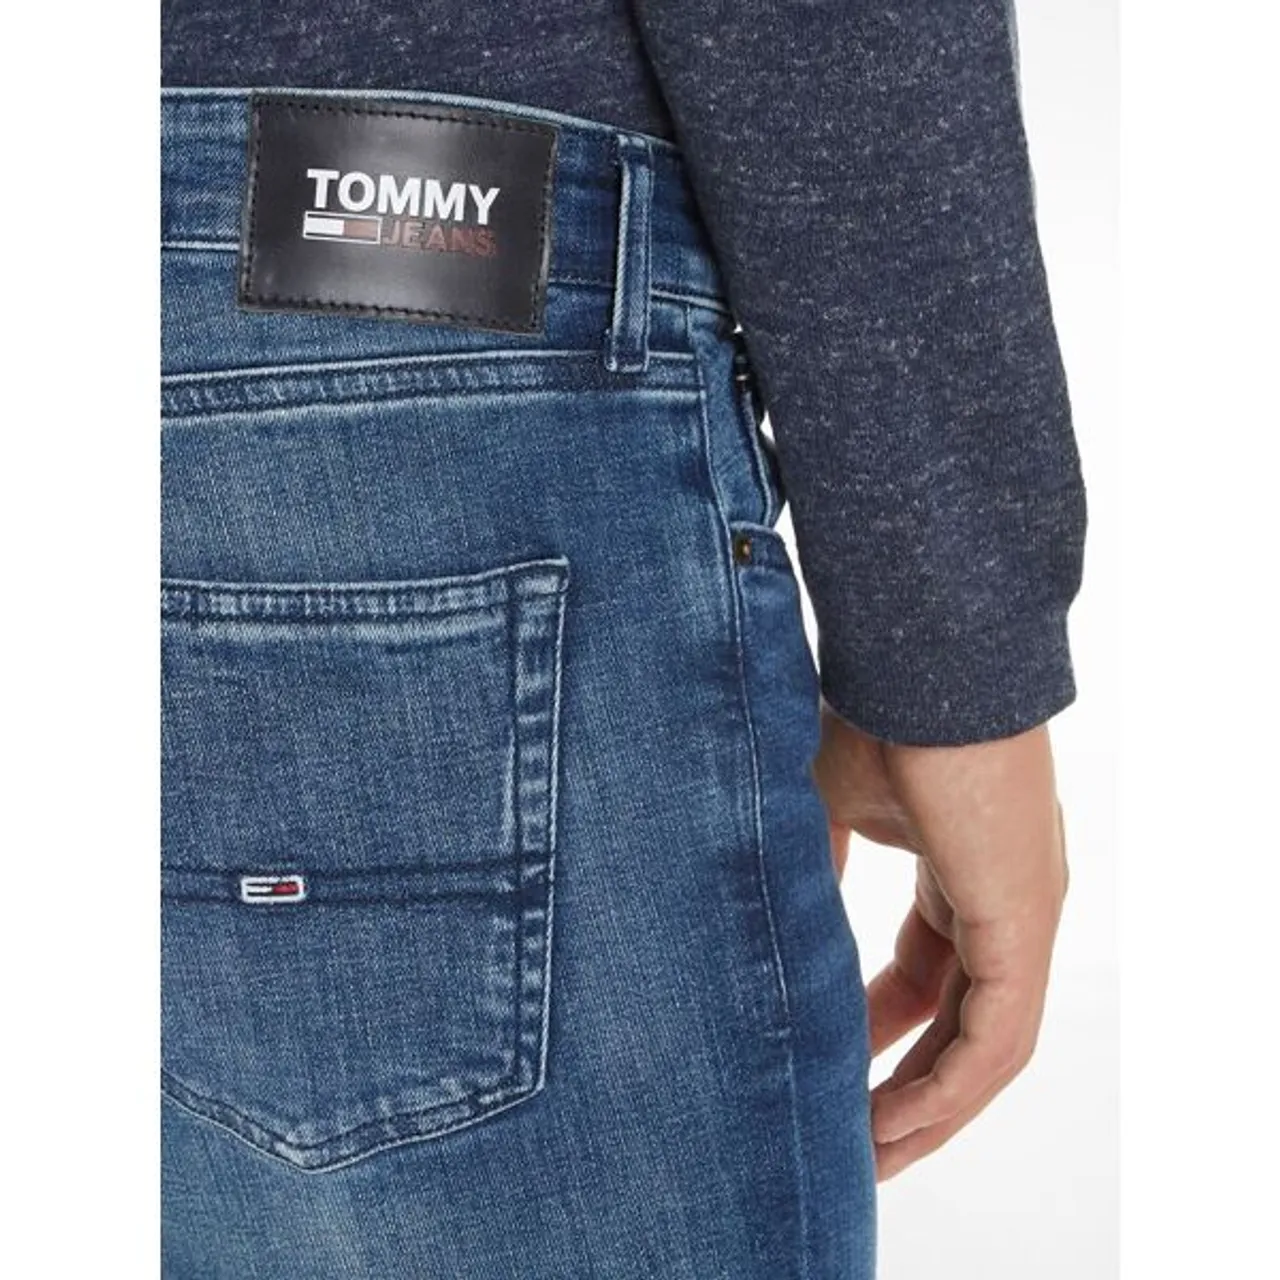 Slim-fit-Jeans TOMMY JEANS "SCANTON SLIM" Gr. 38, Länge 32, blau (jacob mid blue stretch) Herren Jeans Slim Fit